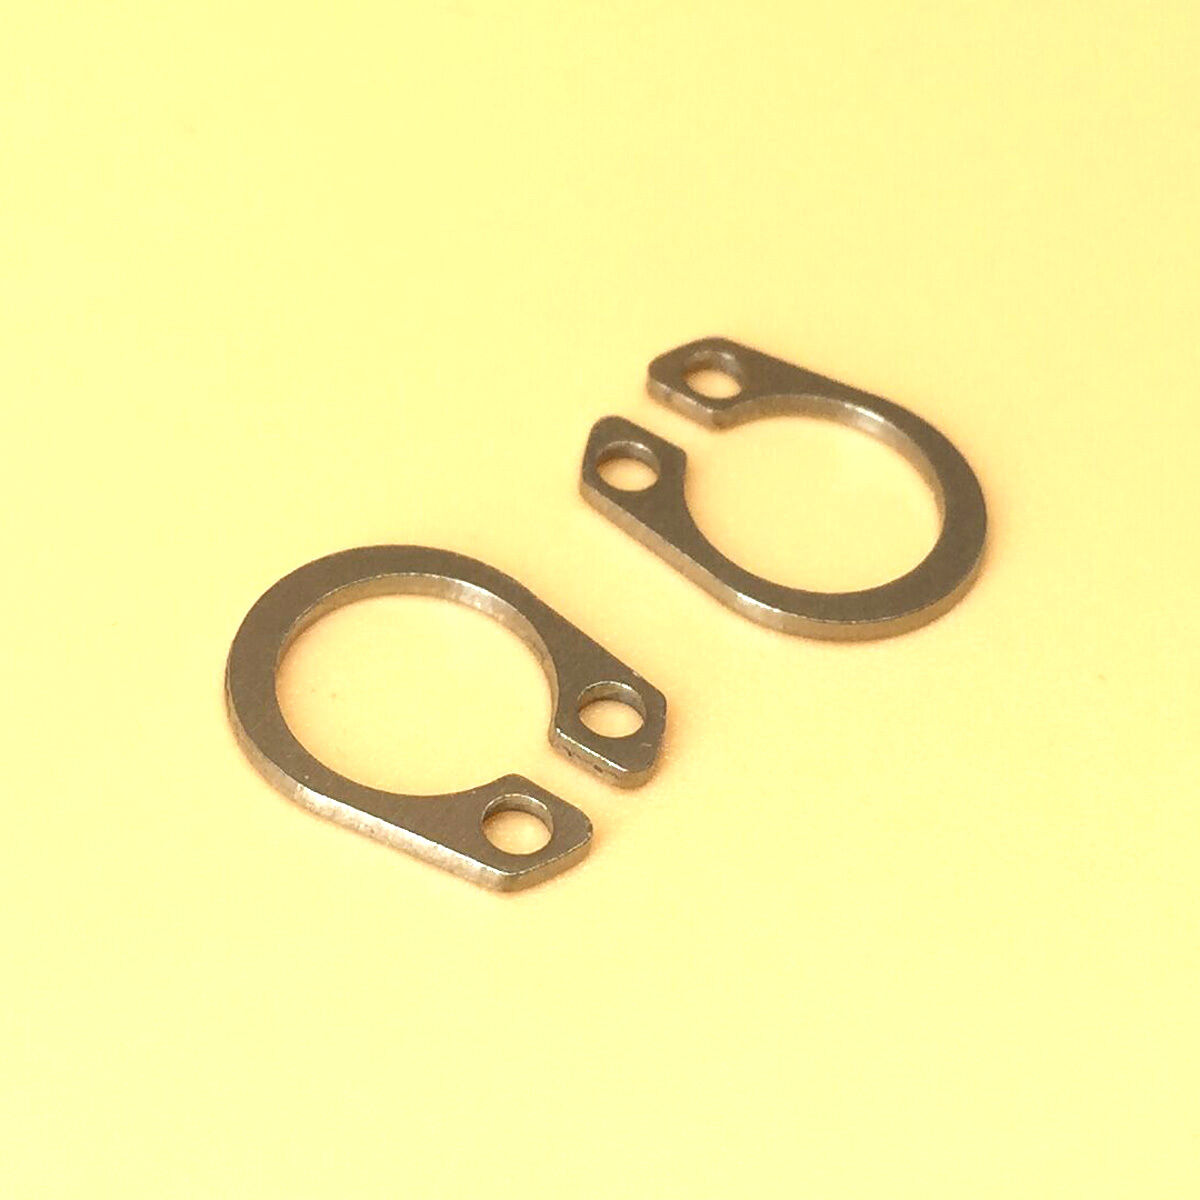 8mm - 26mm 304 Stainless Steel Circlip Retaining Ring Snap Ring Assortment Kit